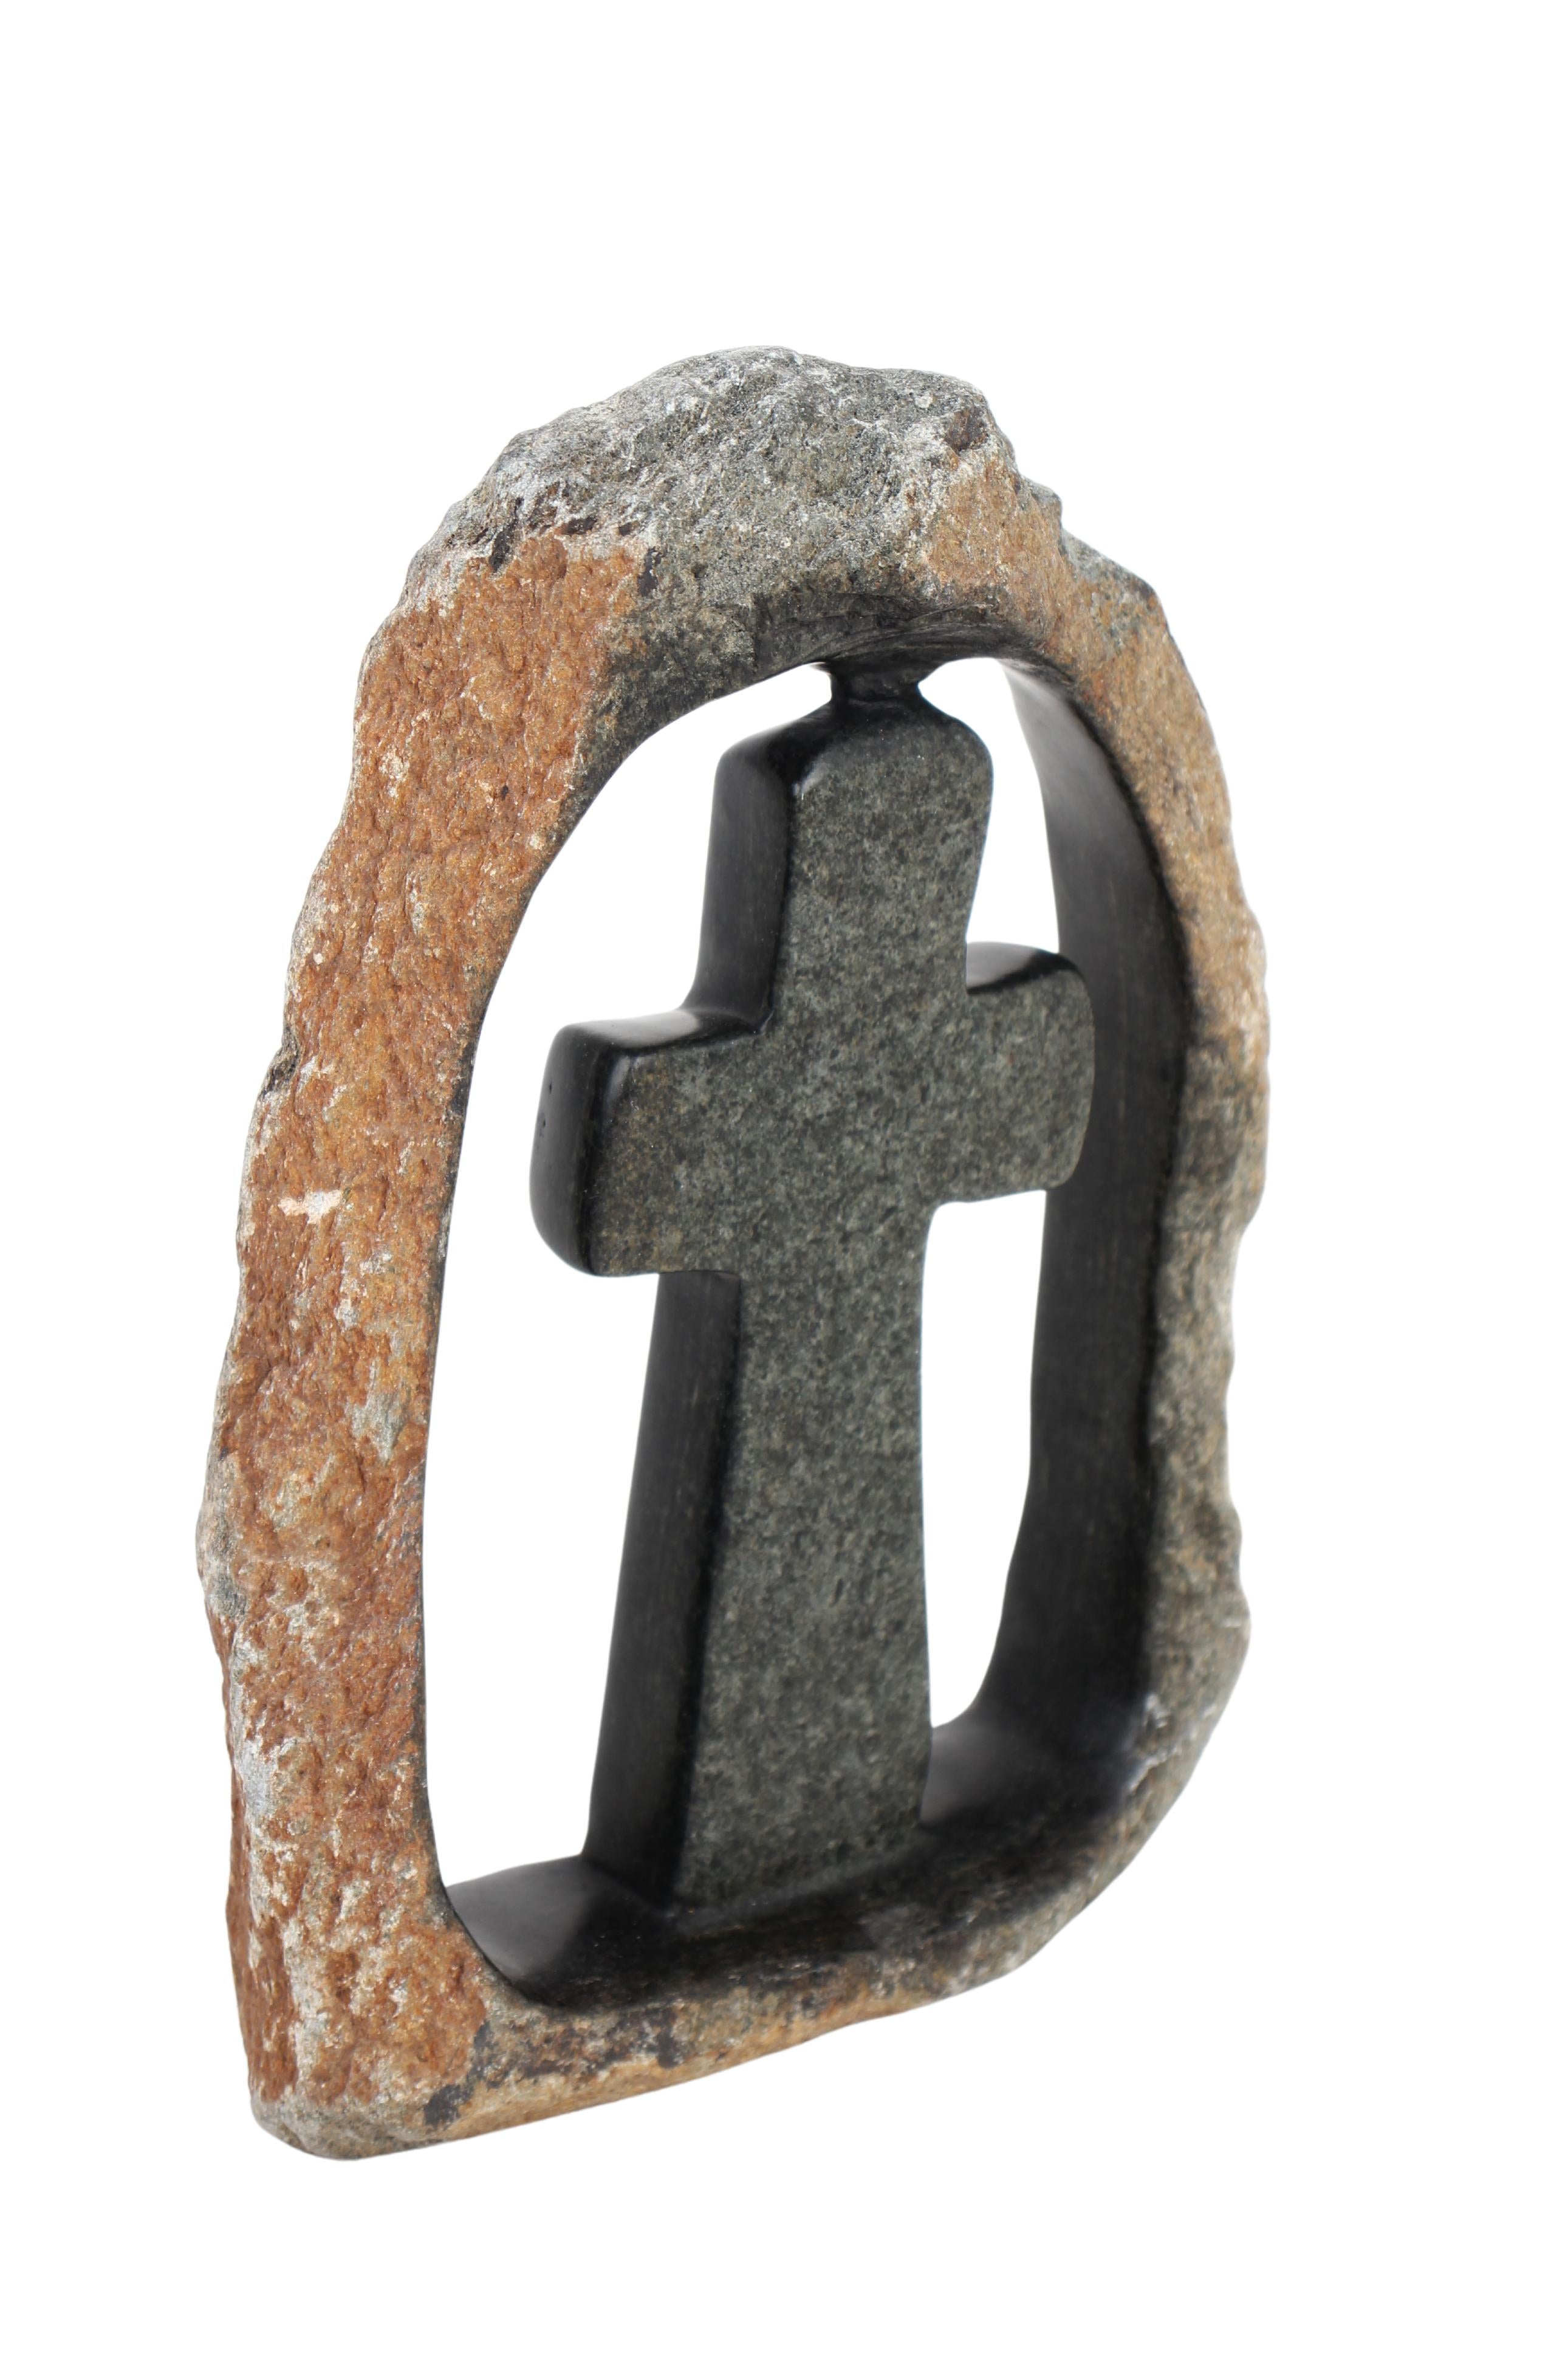 Shona Tribe Serpentine Stone Crosses ~9.8" Tall (New 2024)